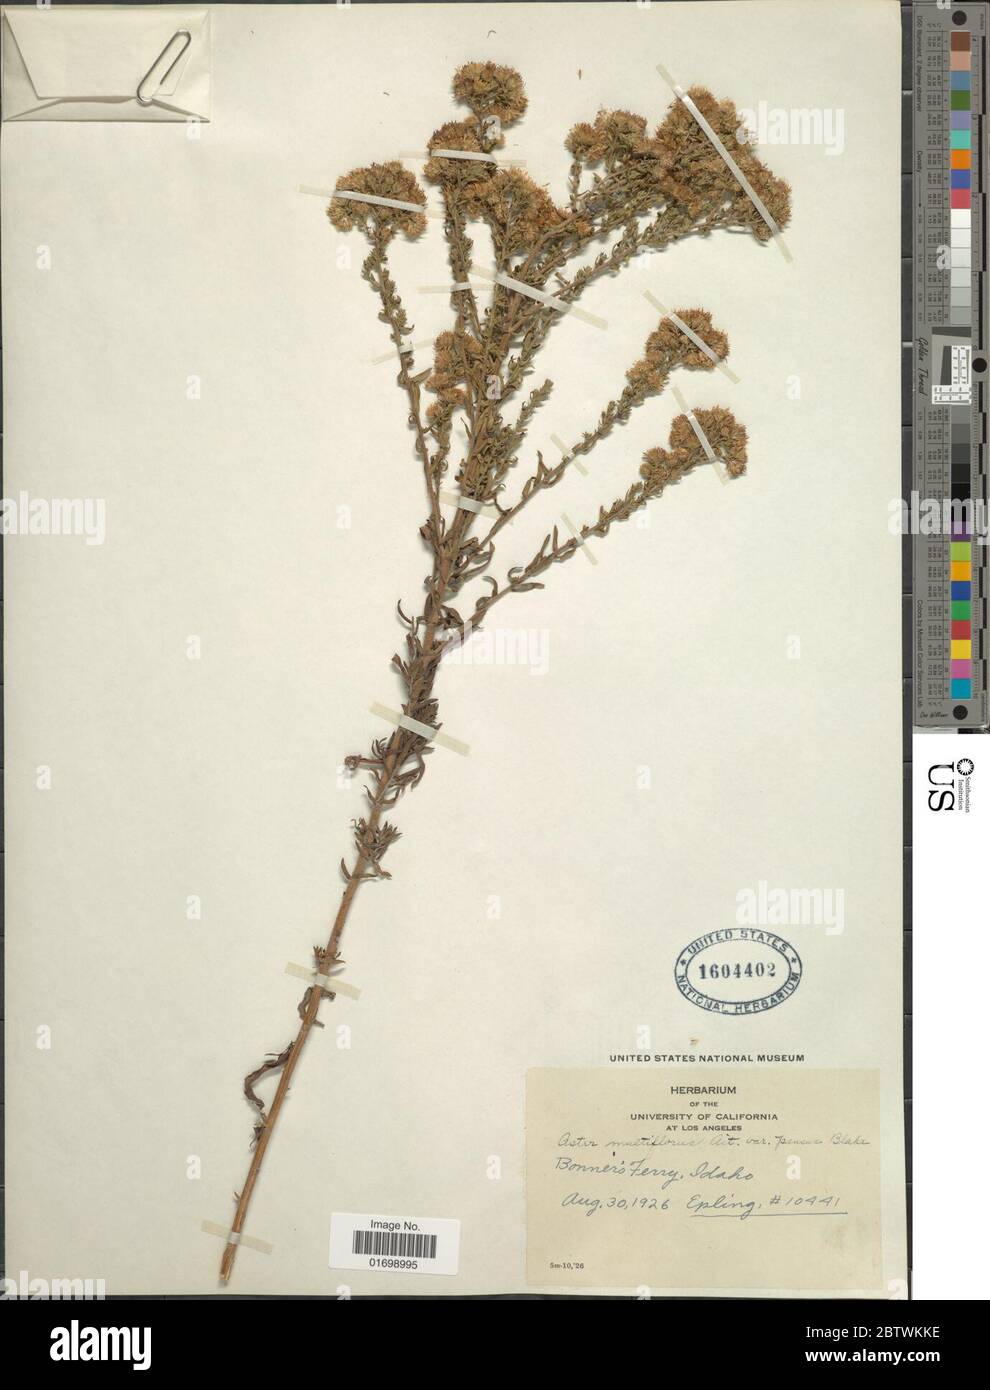 Symphyotrichum ericoides var prostratum Kuntze GL Nesom. Stock Photo